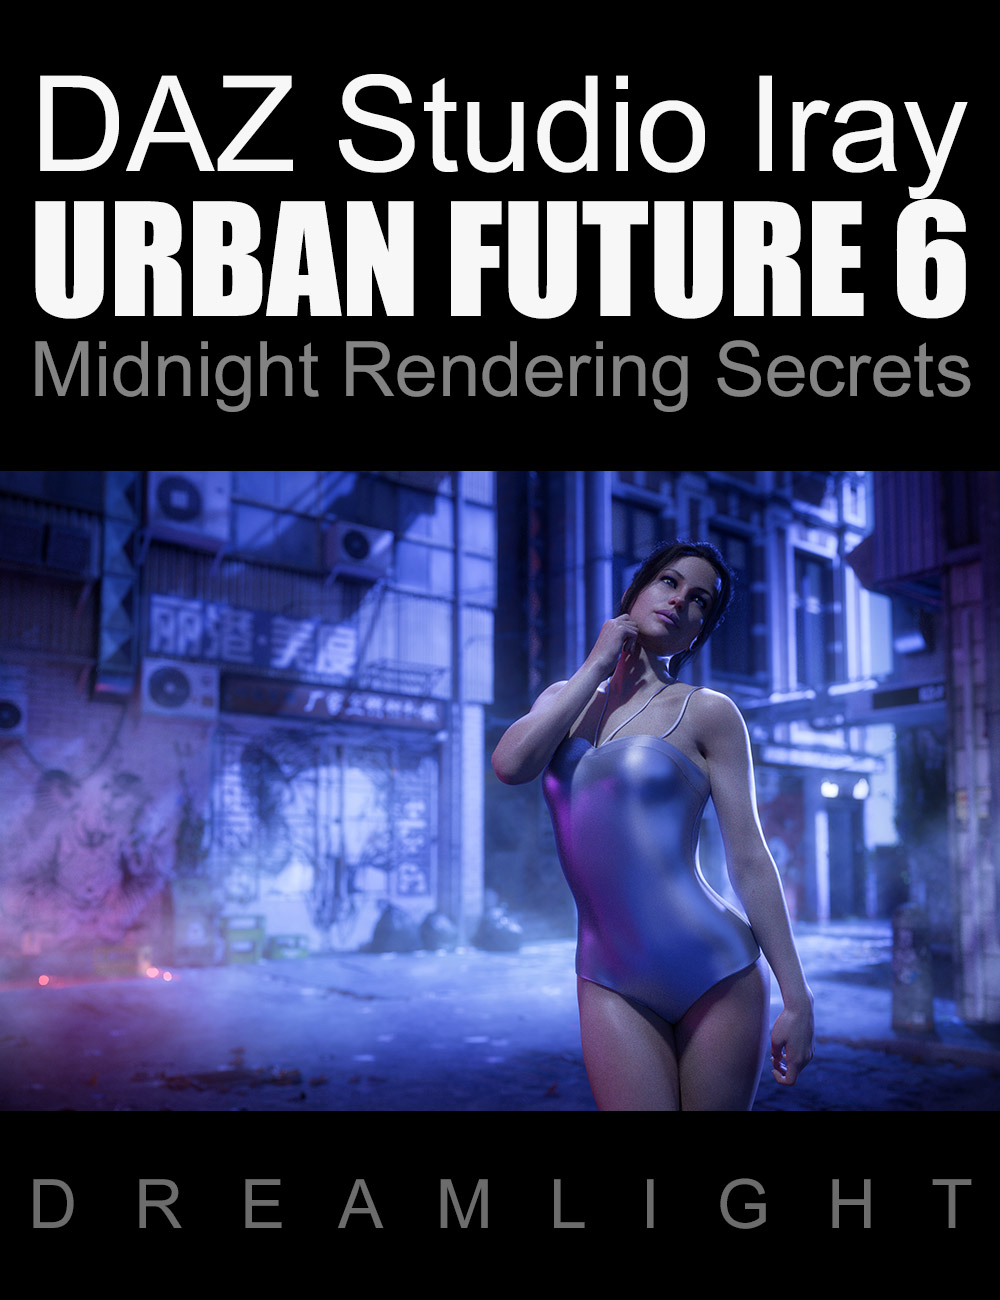 Midnight Rendering Secrets for Urban Future 6 by: Dreamlight, 3D Models by Daz 3D